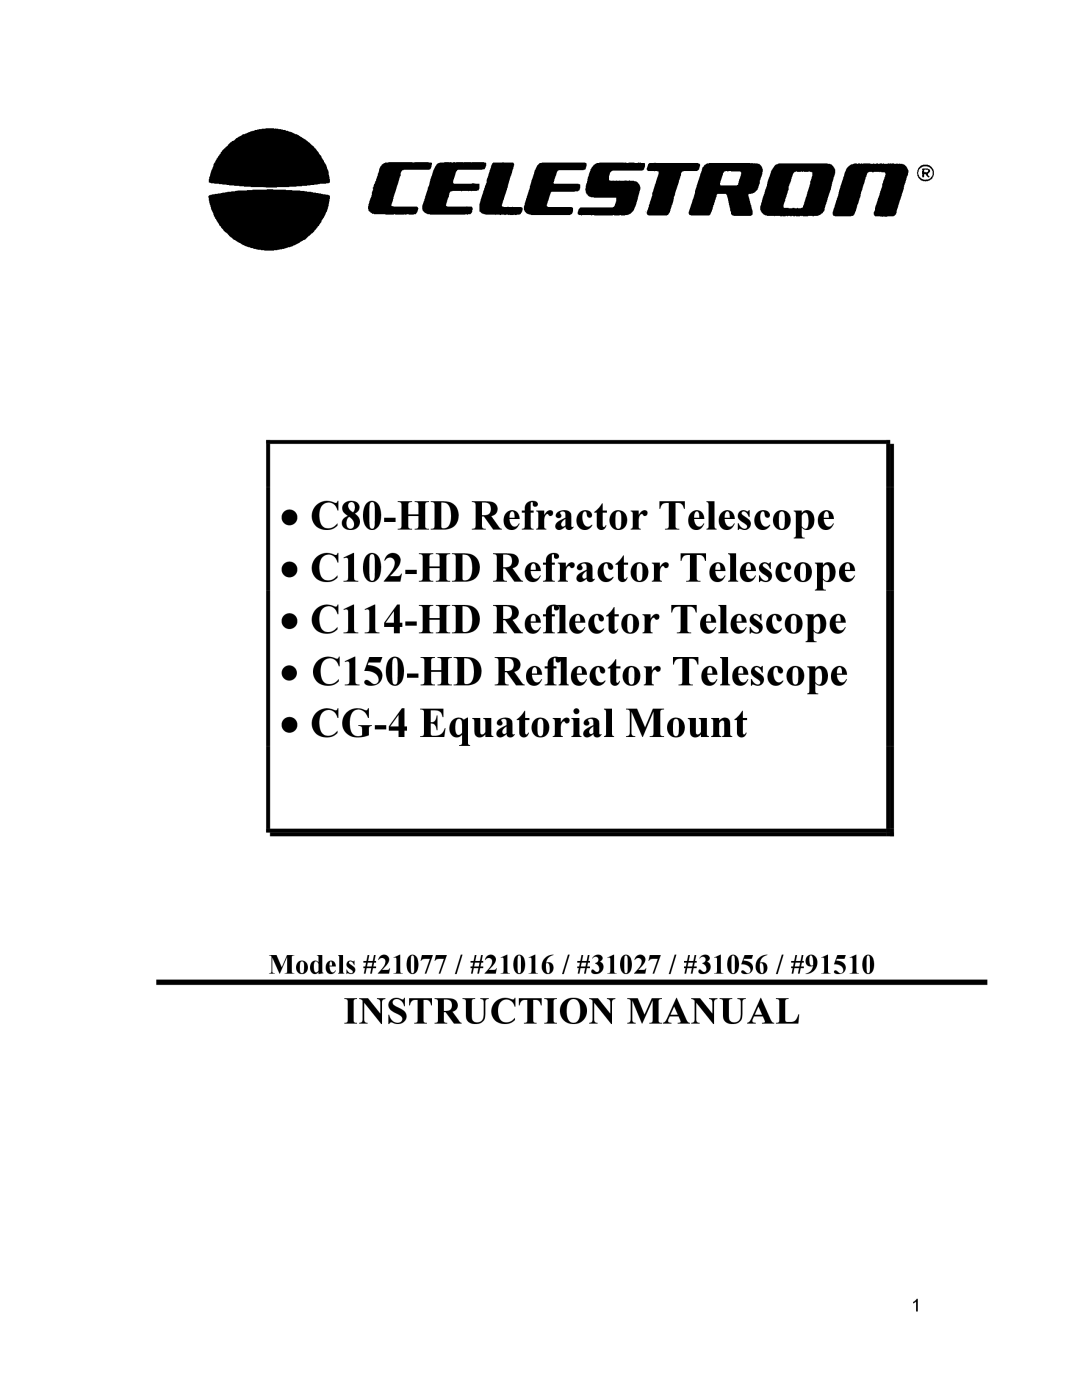 Celestron instruction manual Models #21077 / #21016 / #31027 / #31056 / #91510 